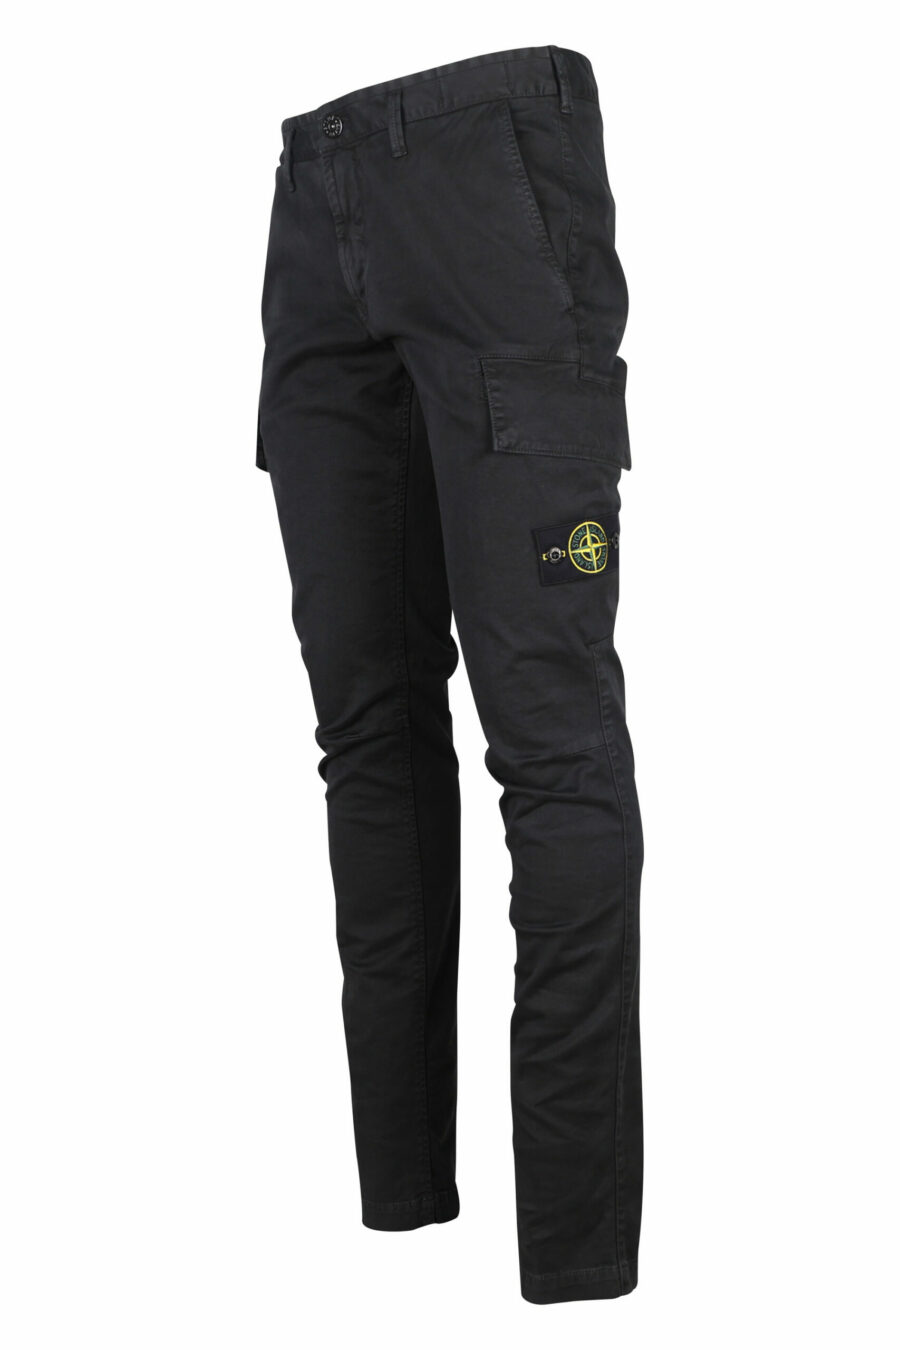 Pantalón negro "skinny" con logo lateral parche - 8052572762253 1 scaled